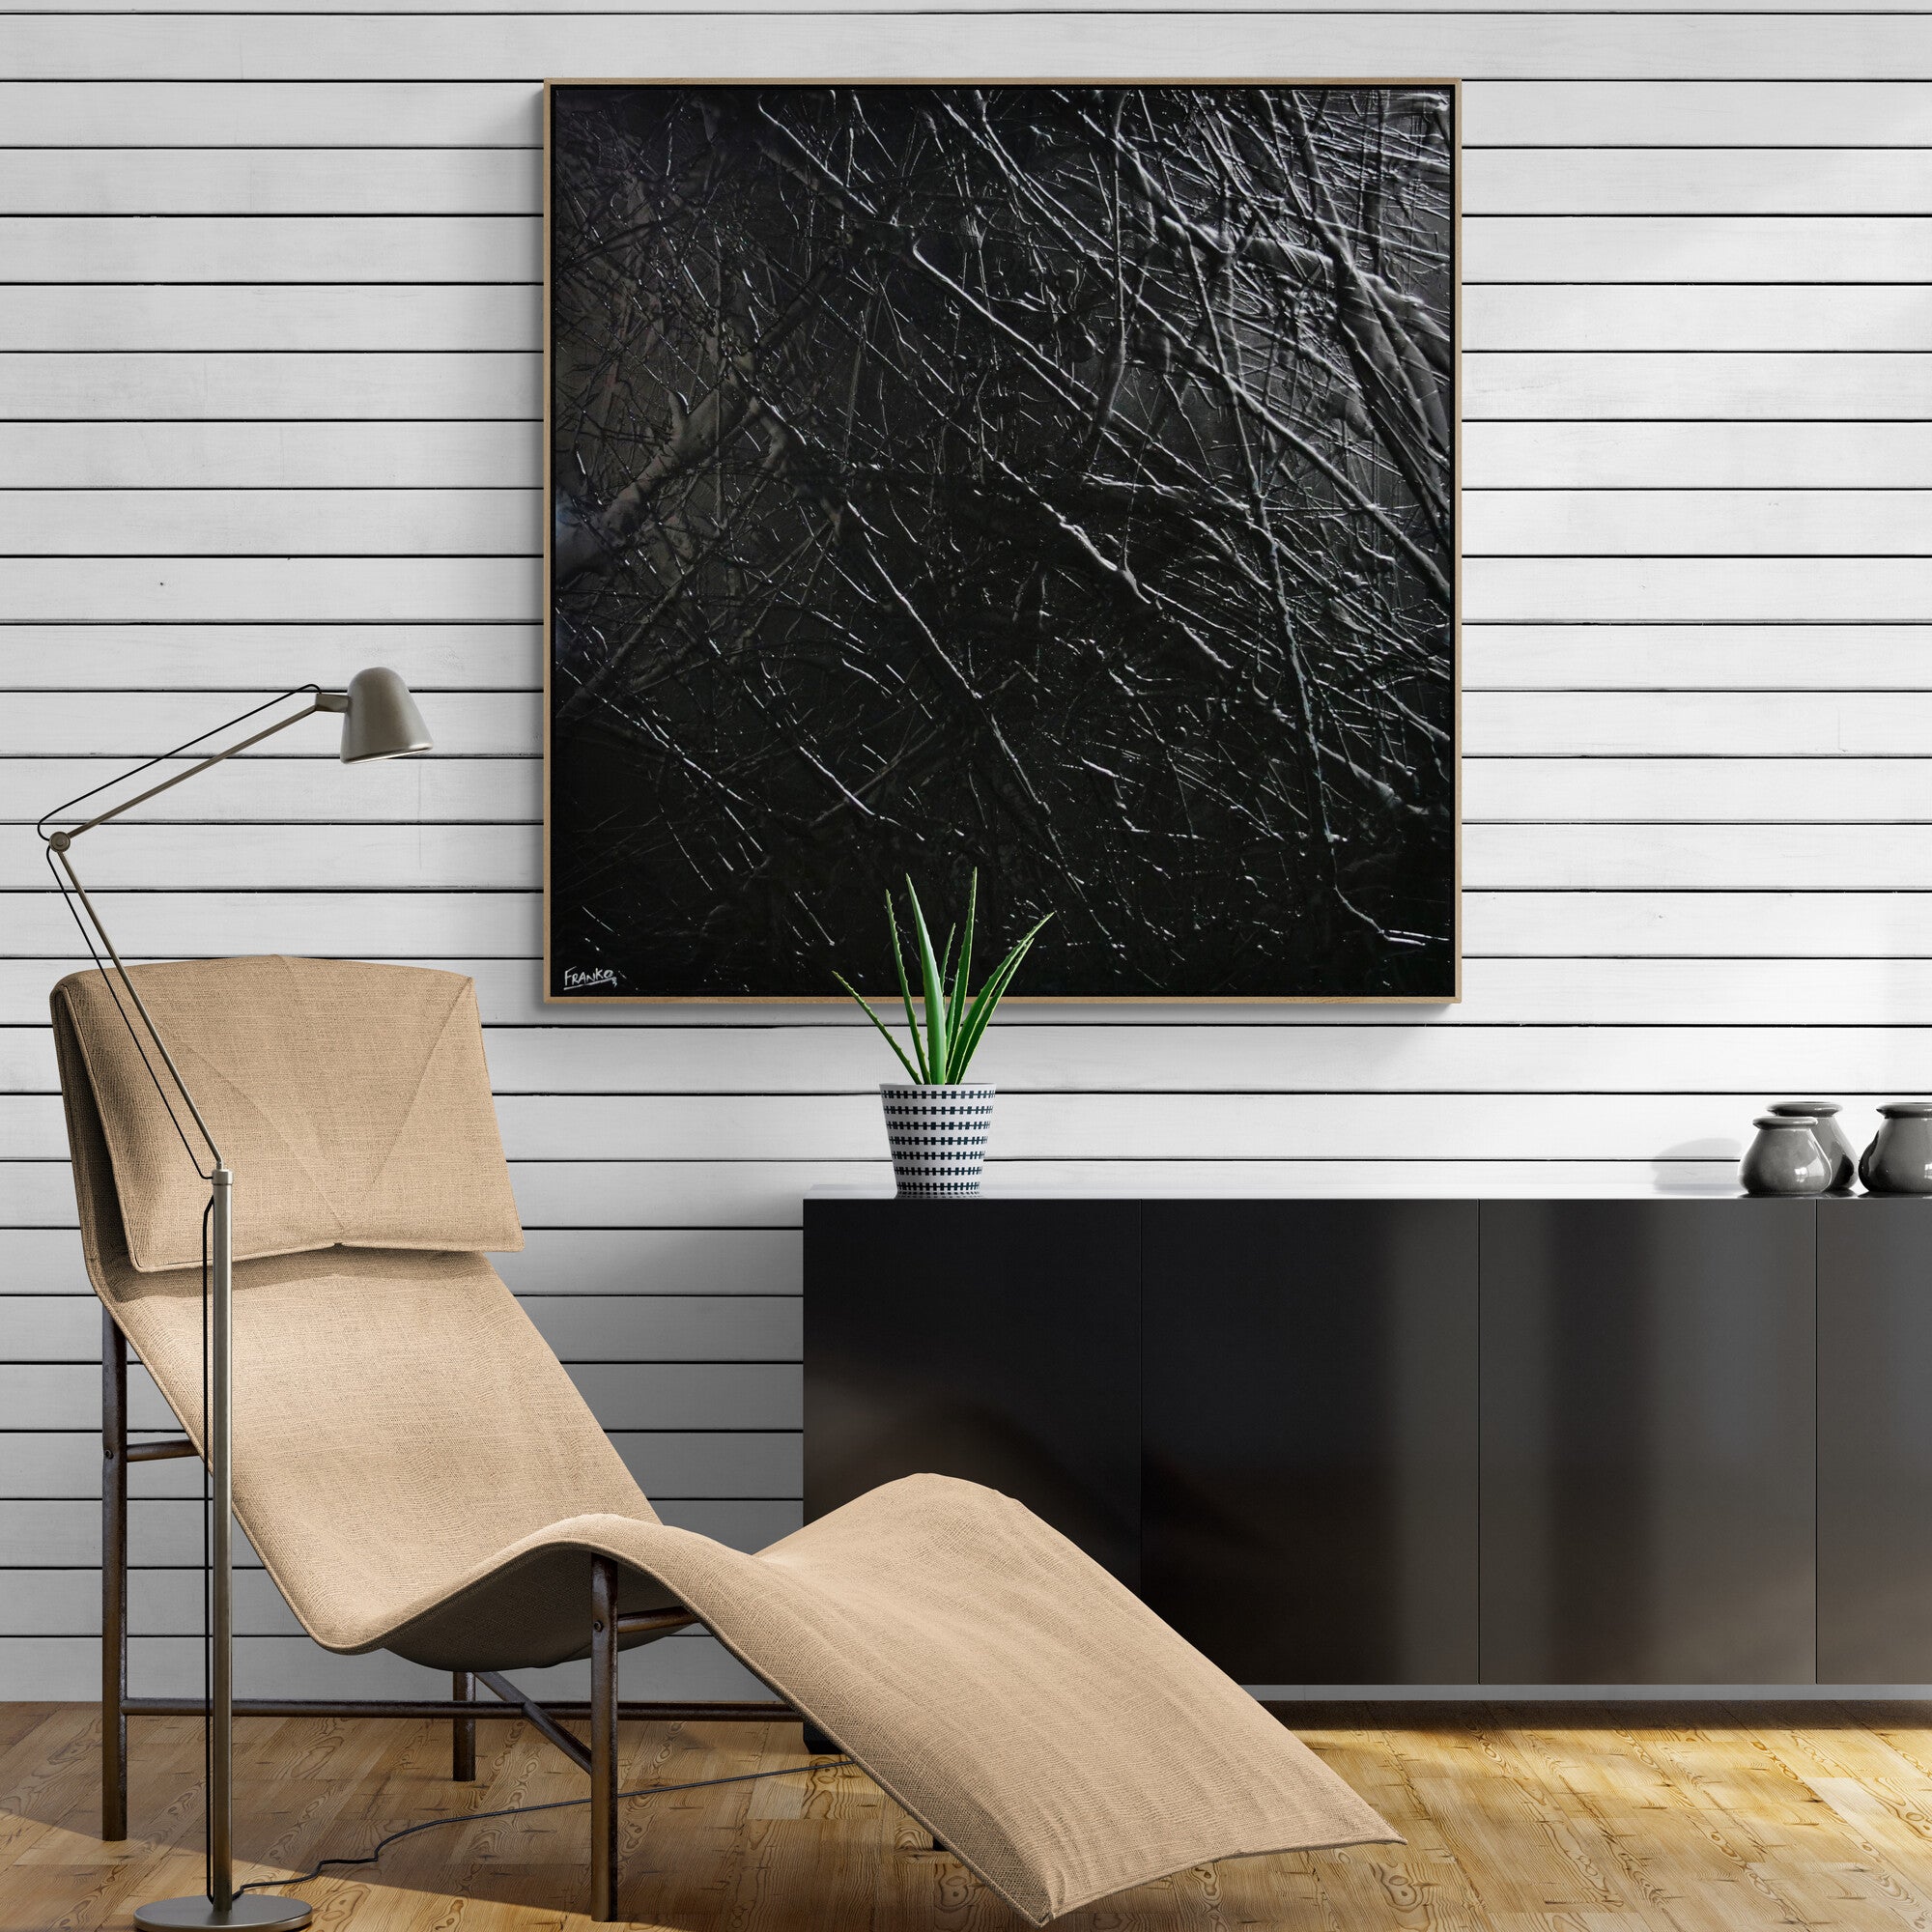 Nero 120cm x 120cm Black Textured Abstract Painting